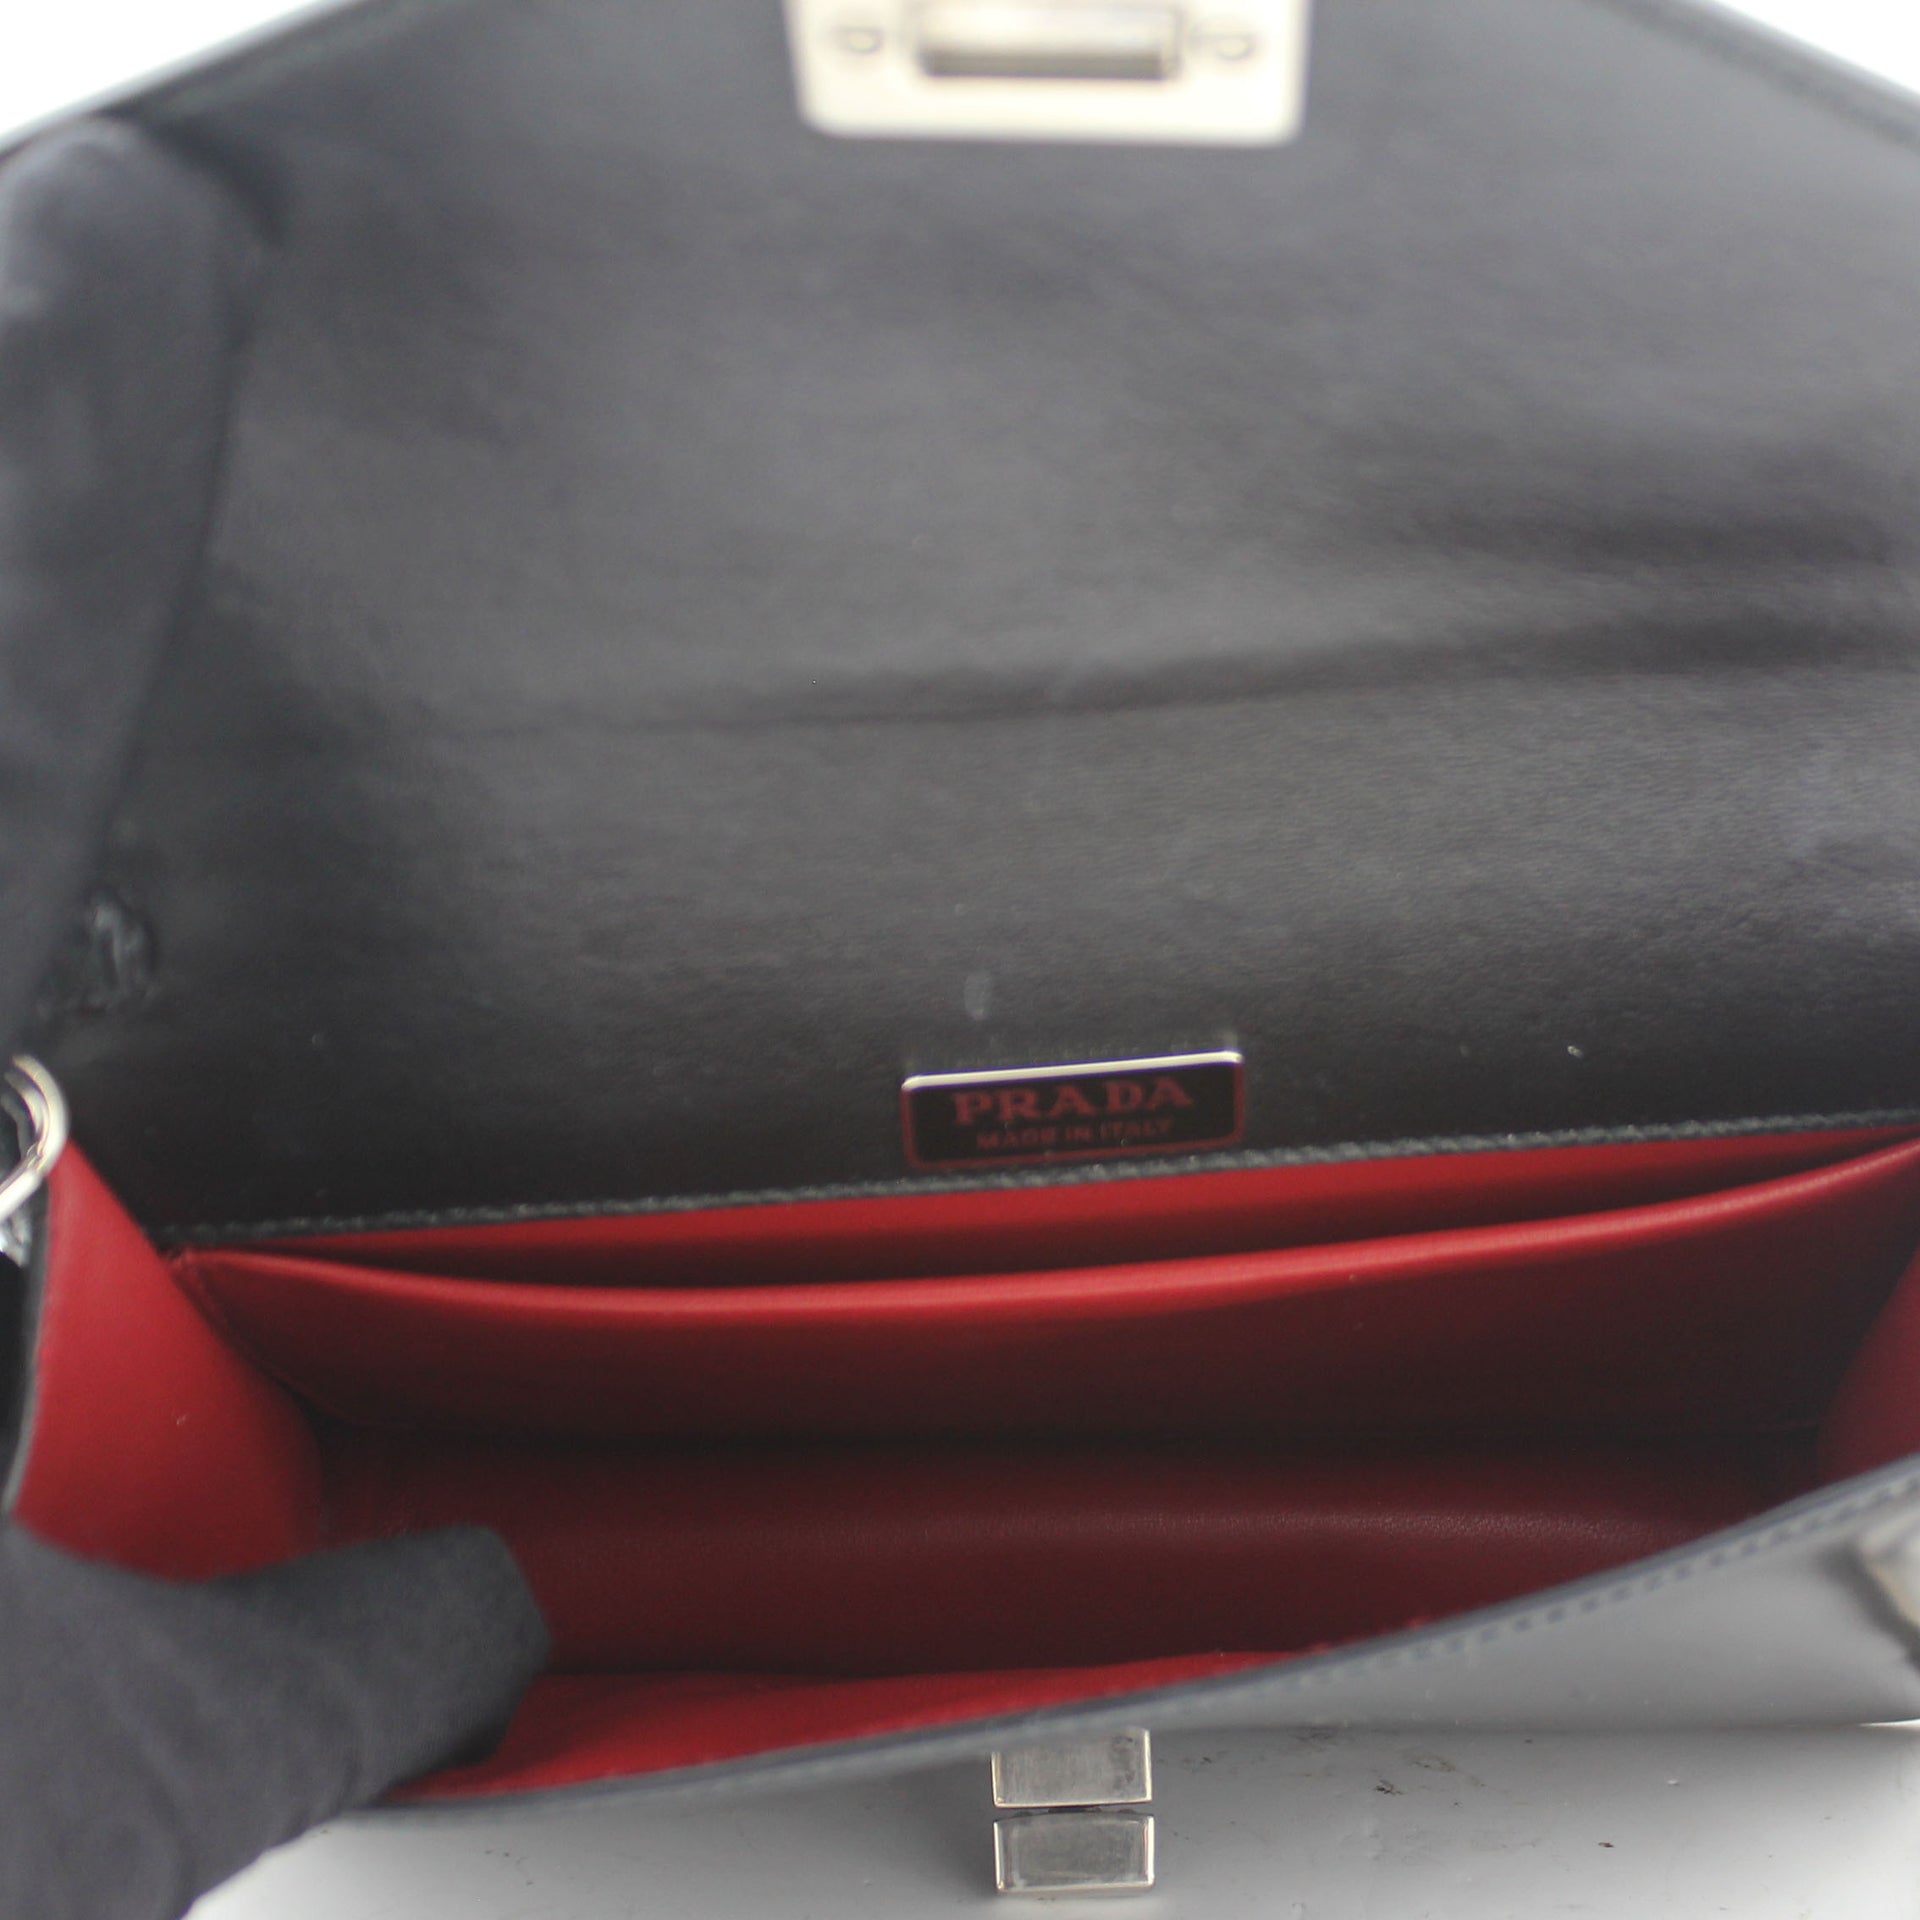 Box Leather turn-lock crossbody Bag